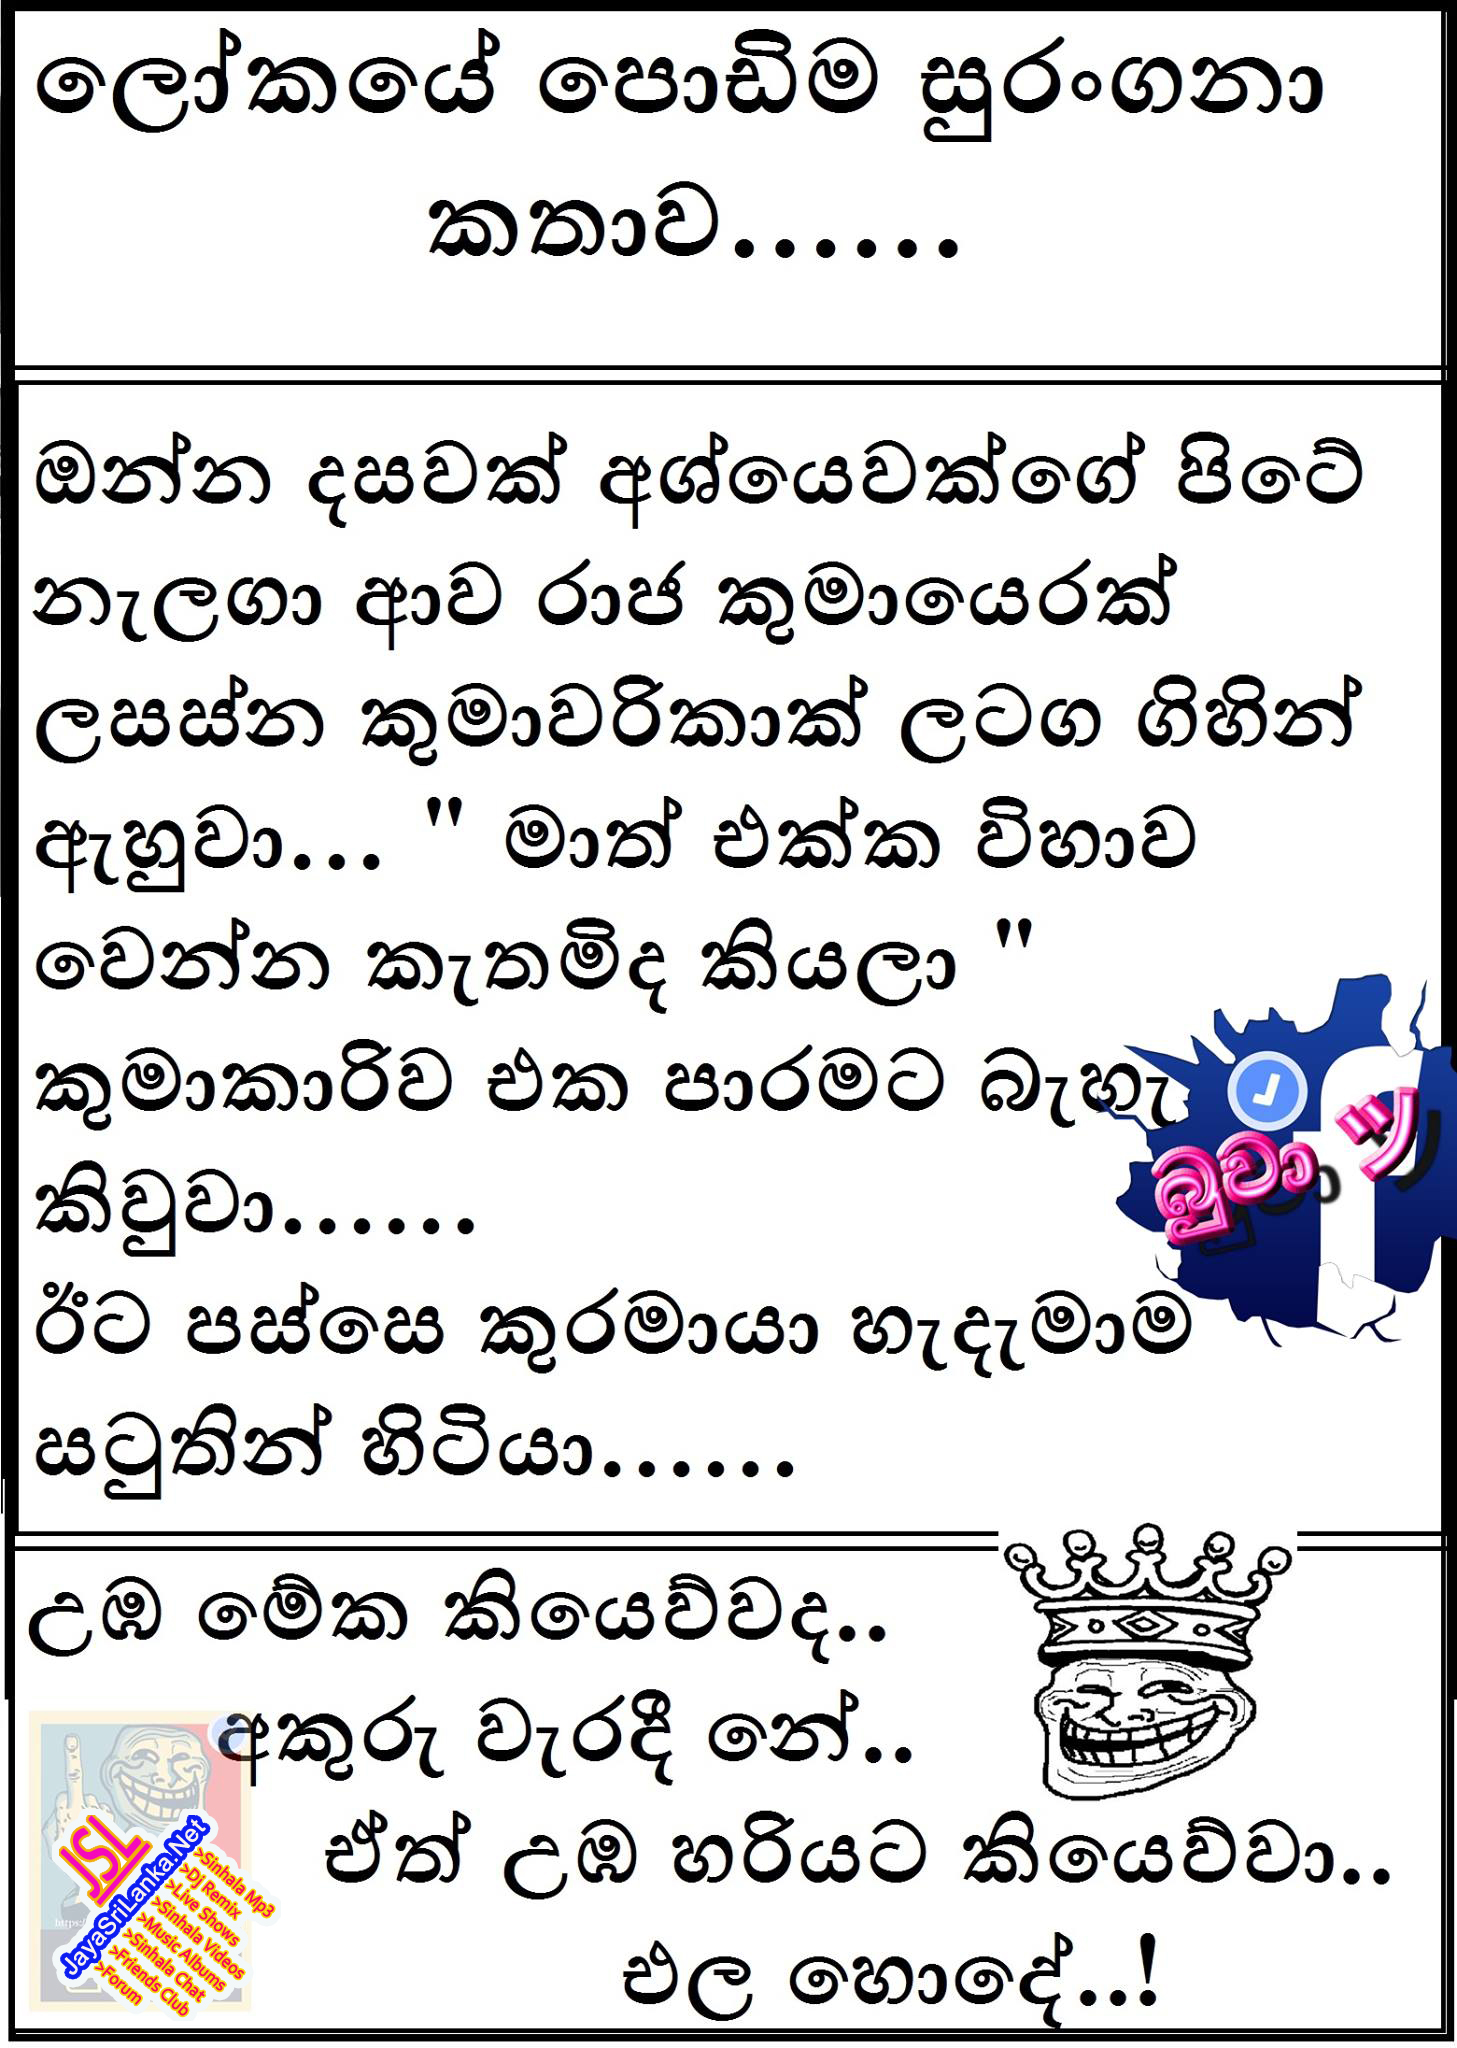 Sinhala Joke 233